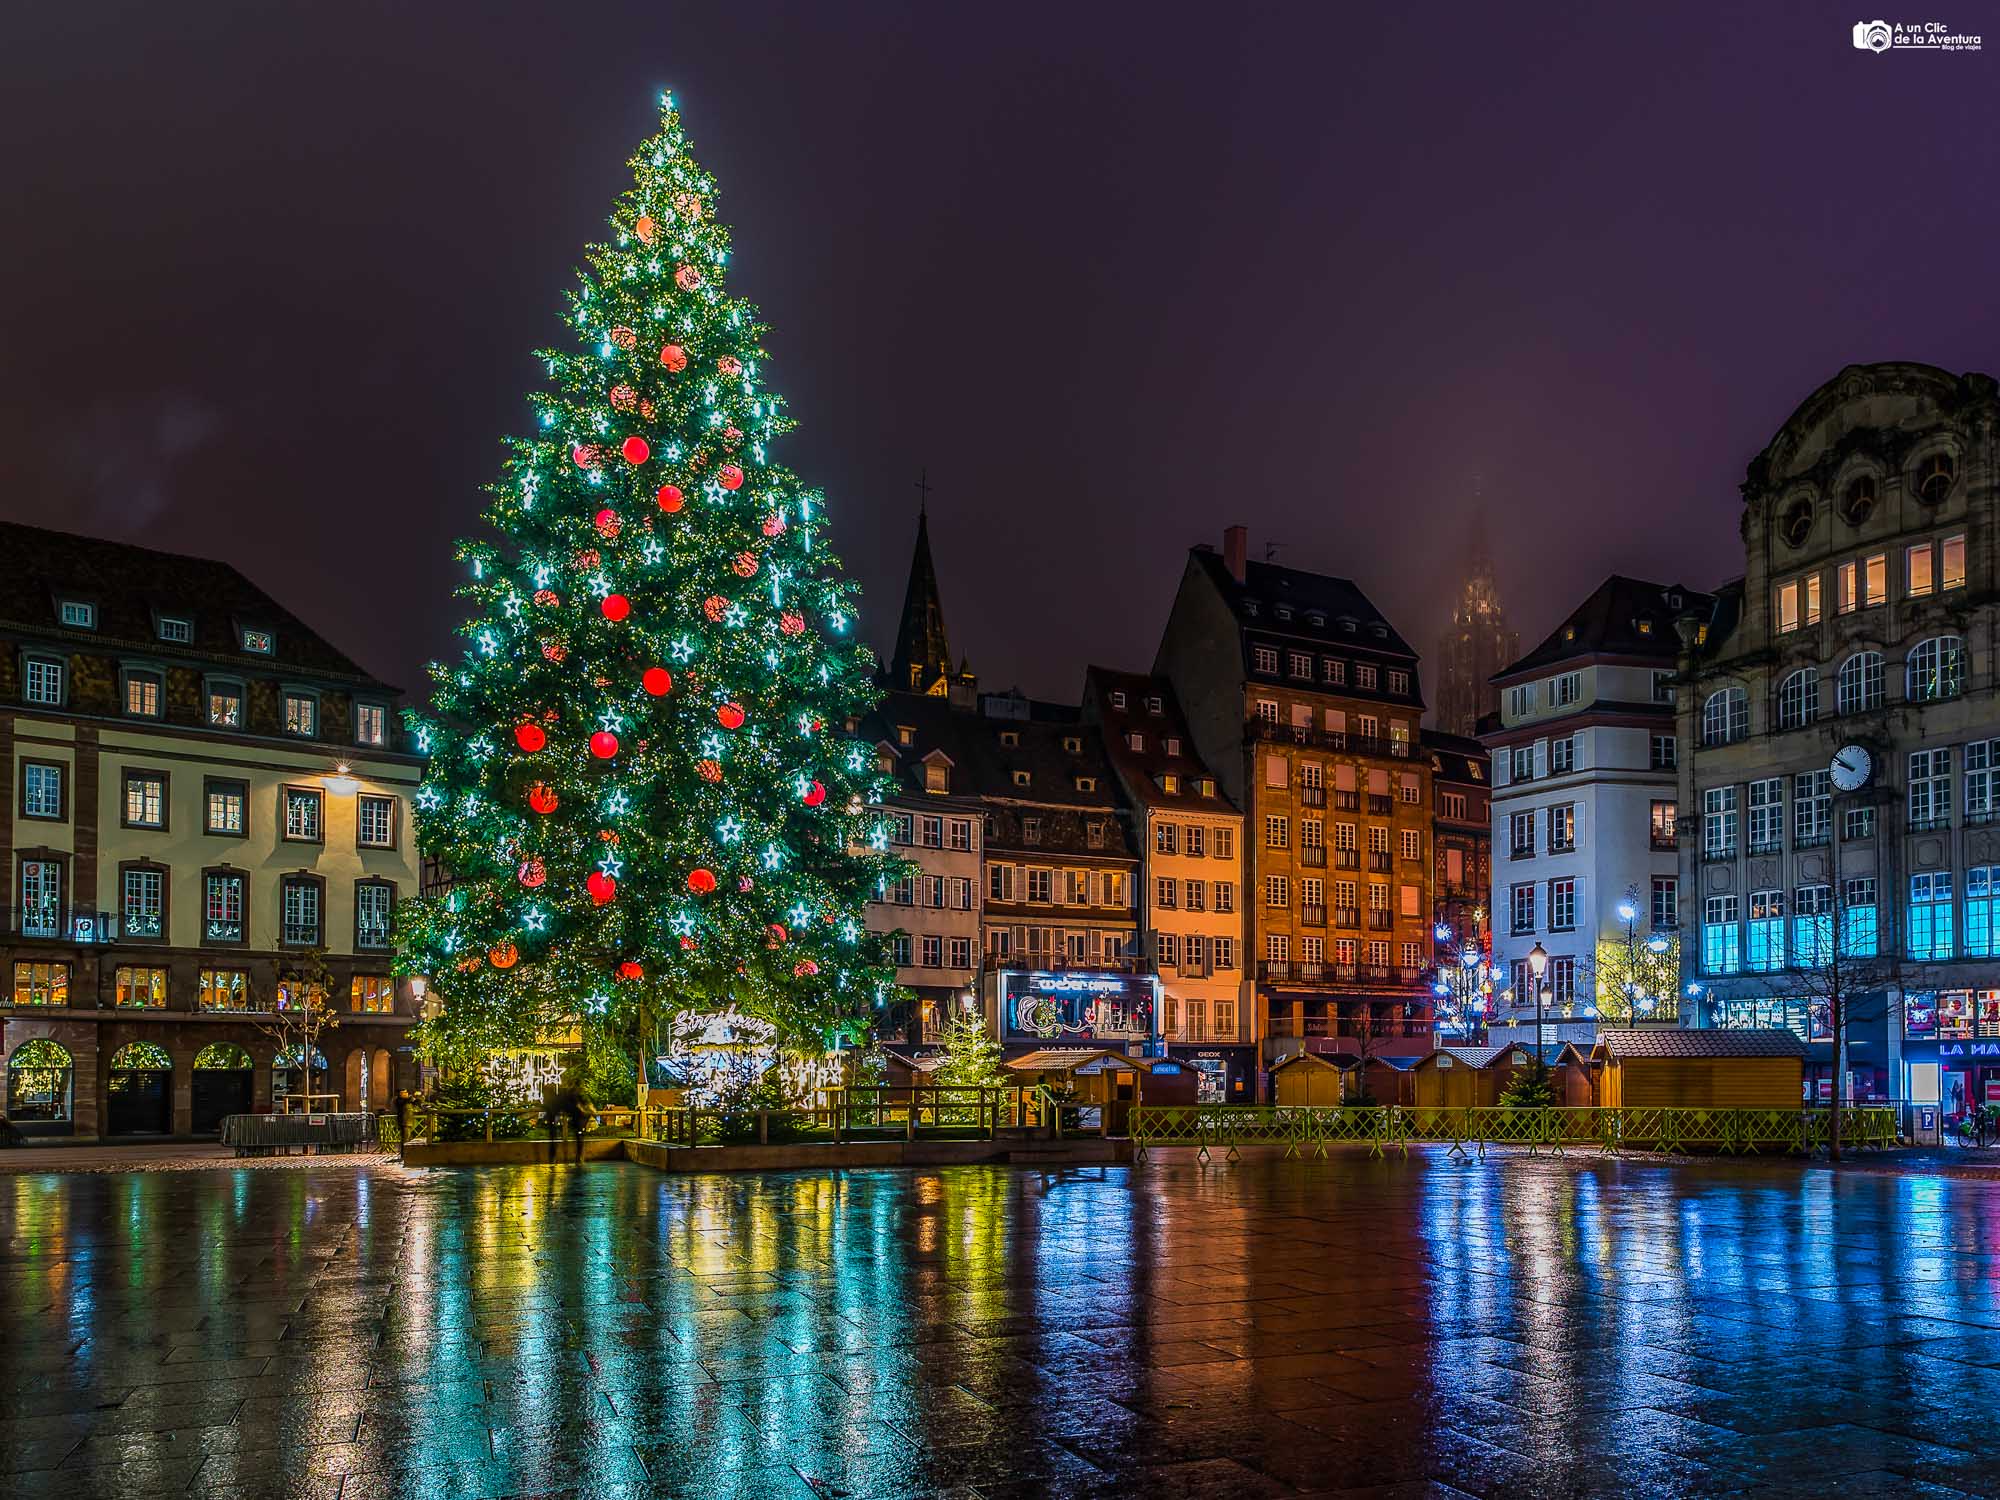 Mercado de Navidad de Estrasburgo, Mercados navideños de Europa